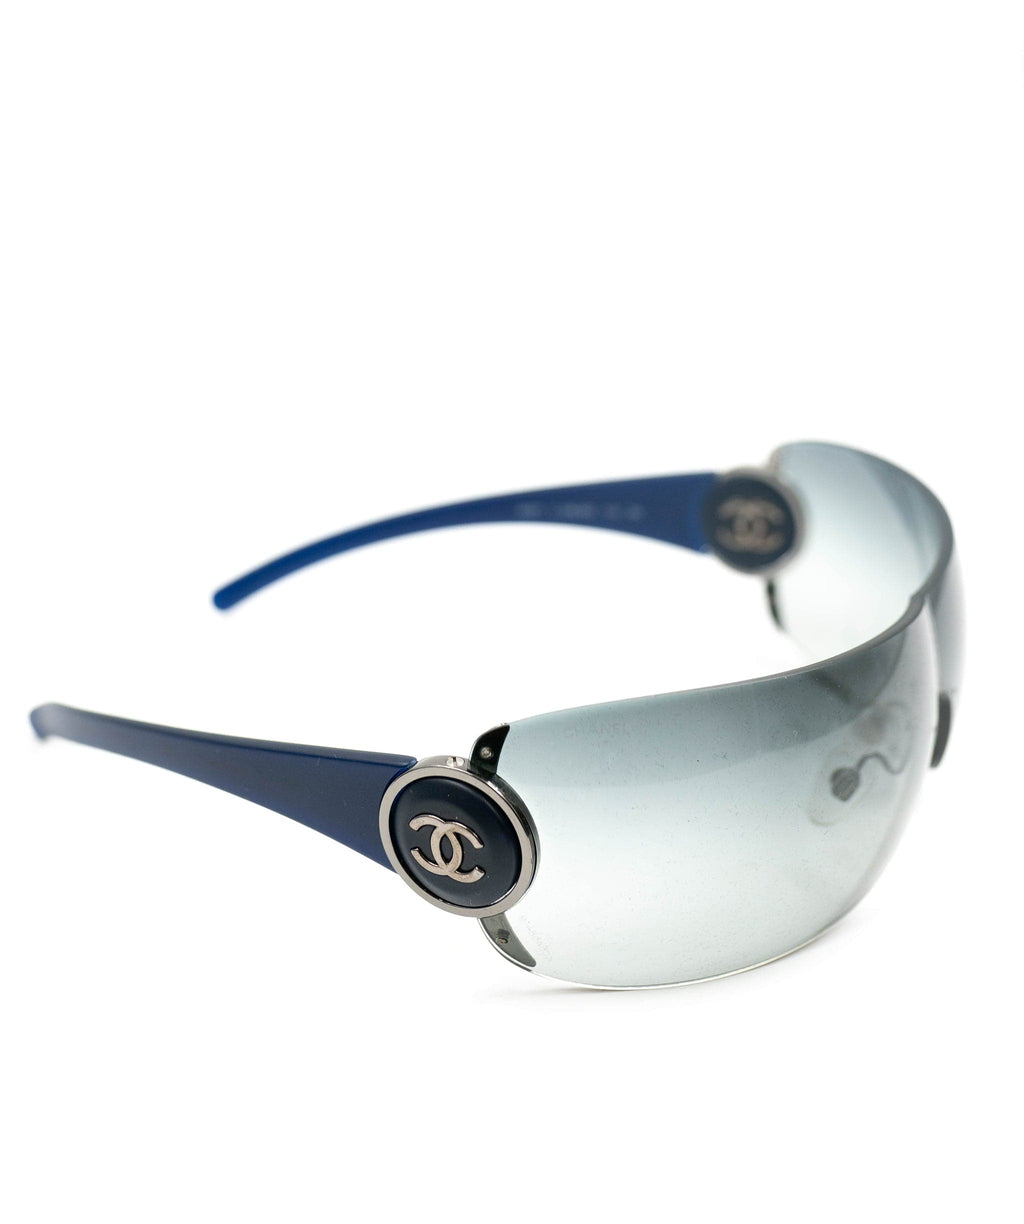 Chanel Sunglasses – Dreaming Of Designer